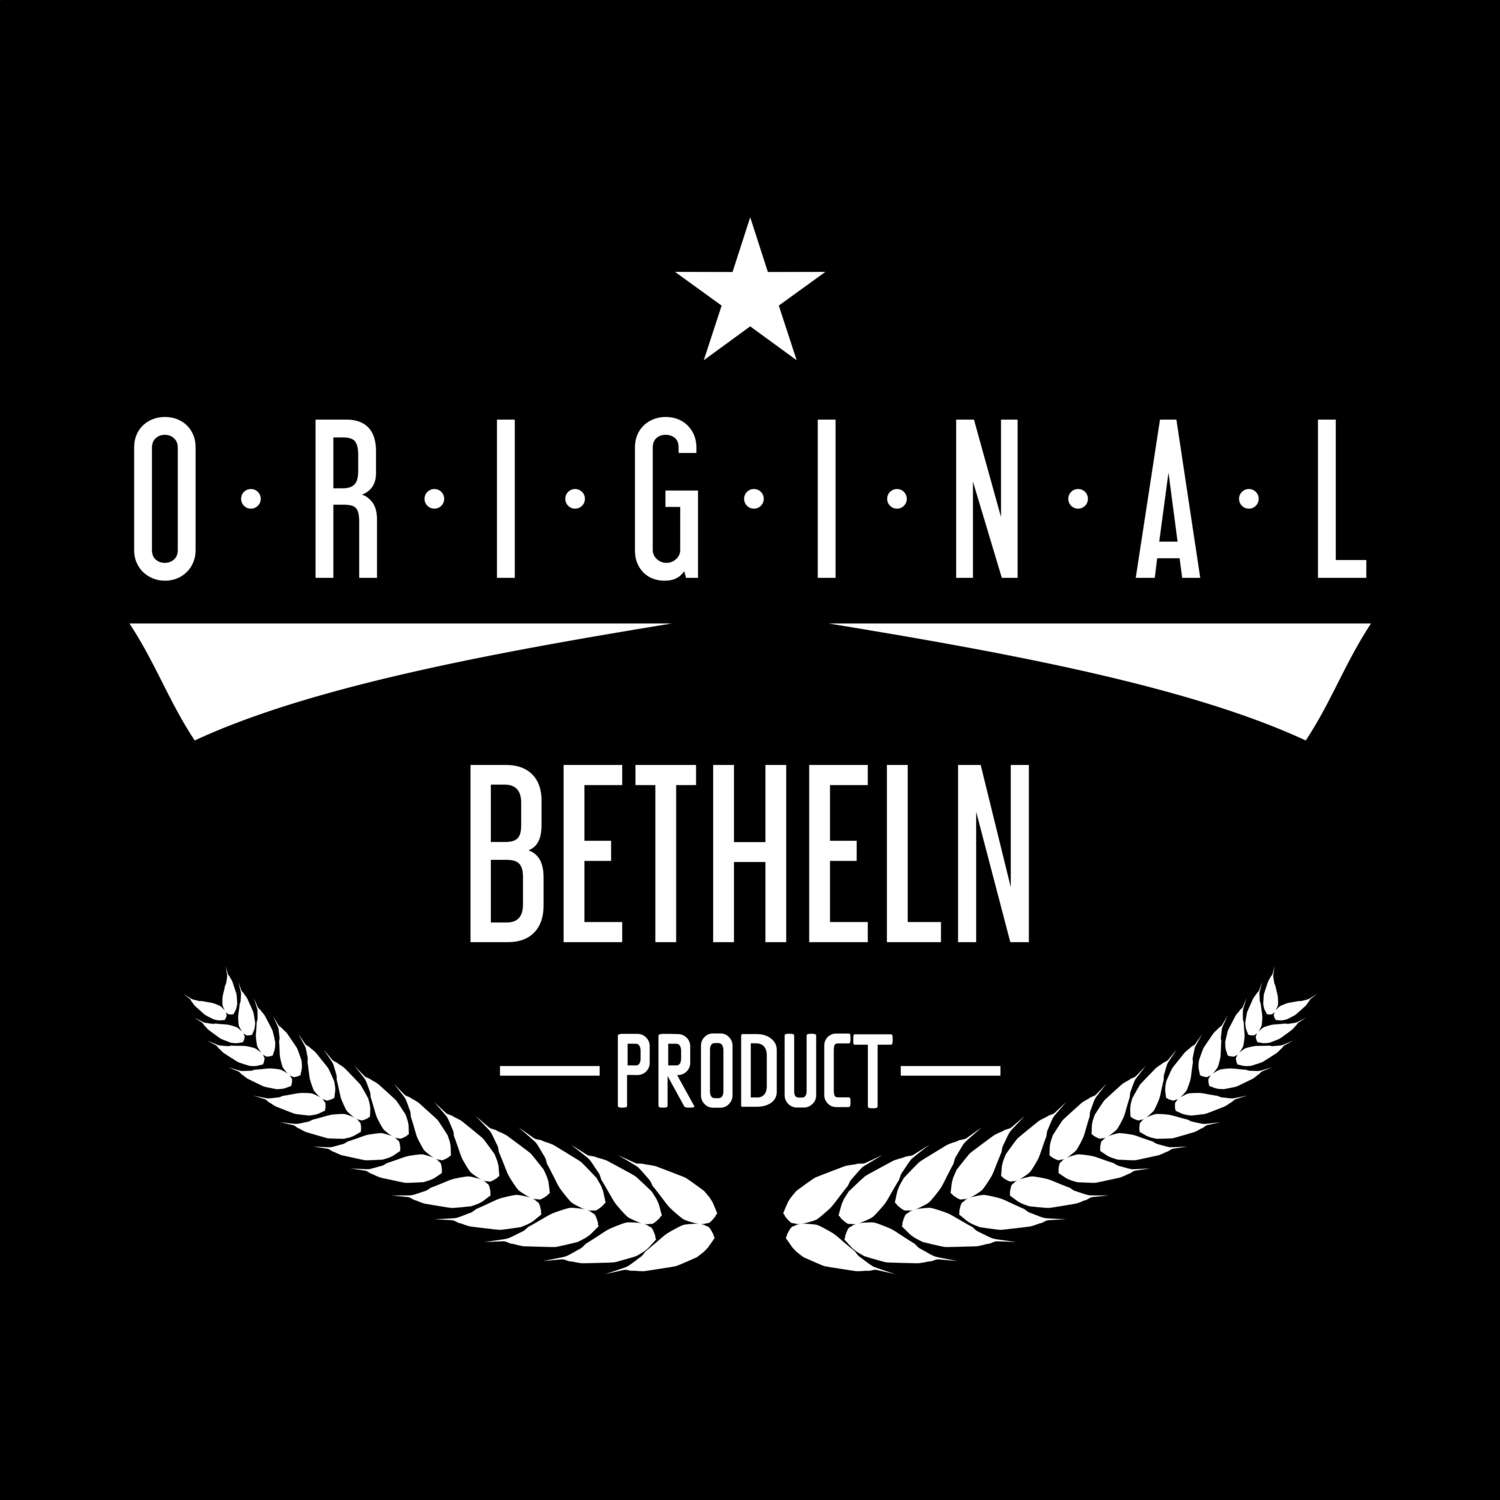 Betheln T-Shirt »Original Product«